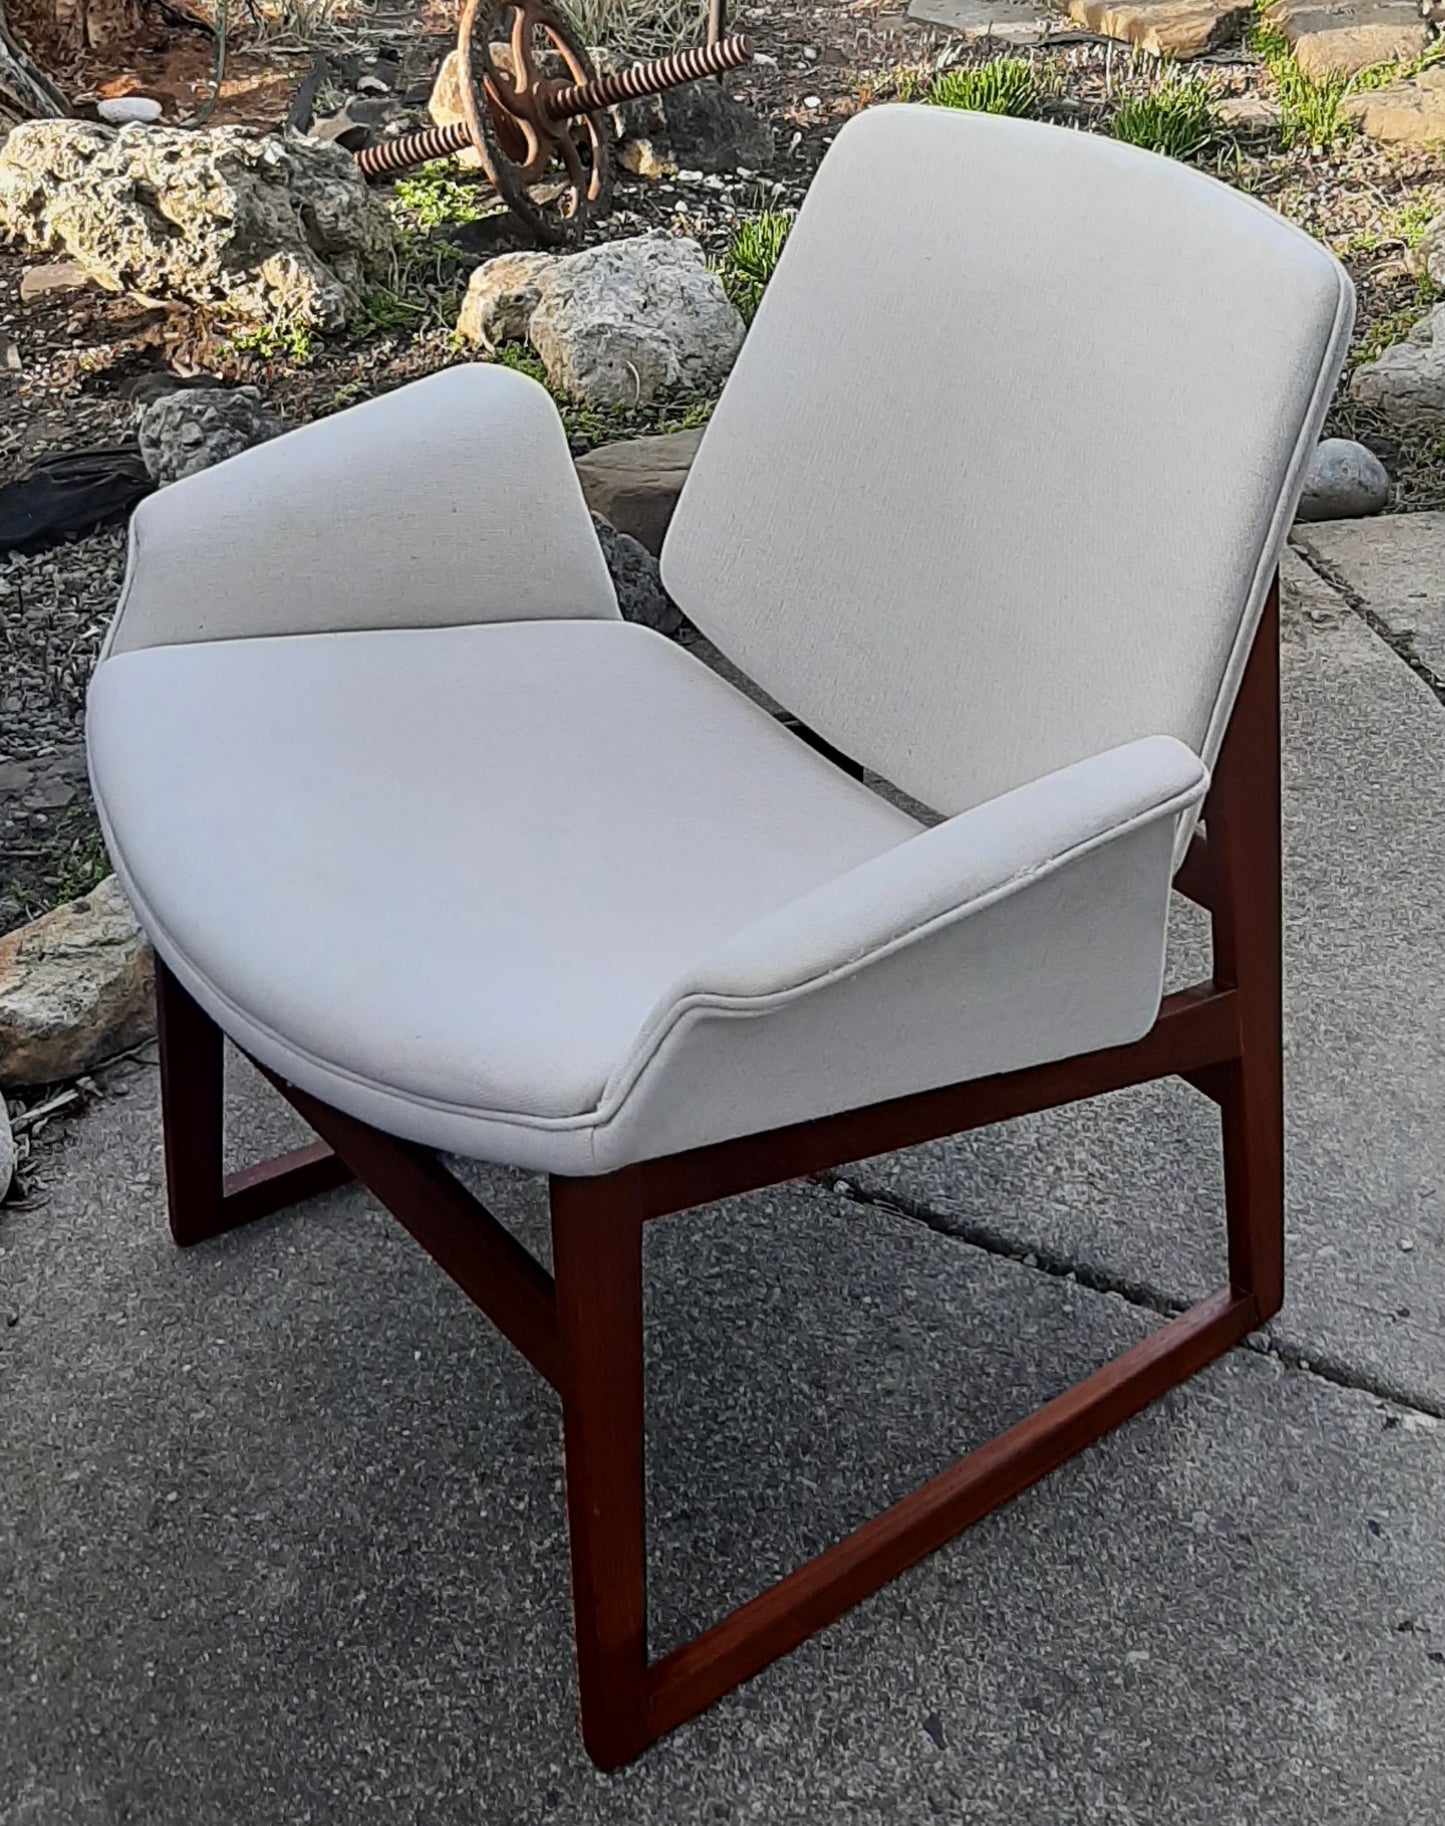 REFINISHED Danish Mid-Century Modern Teak Lounge Chair by Illum Wikkelsø